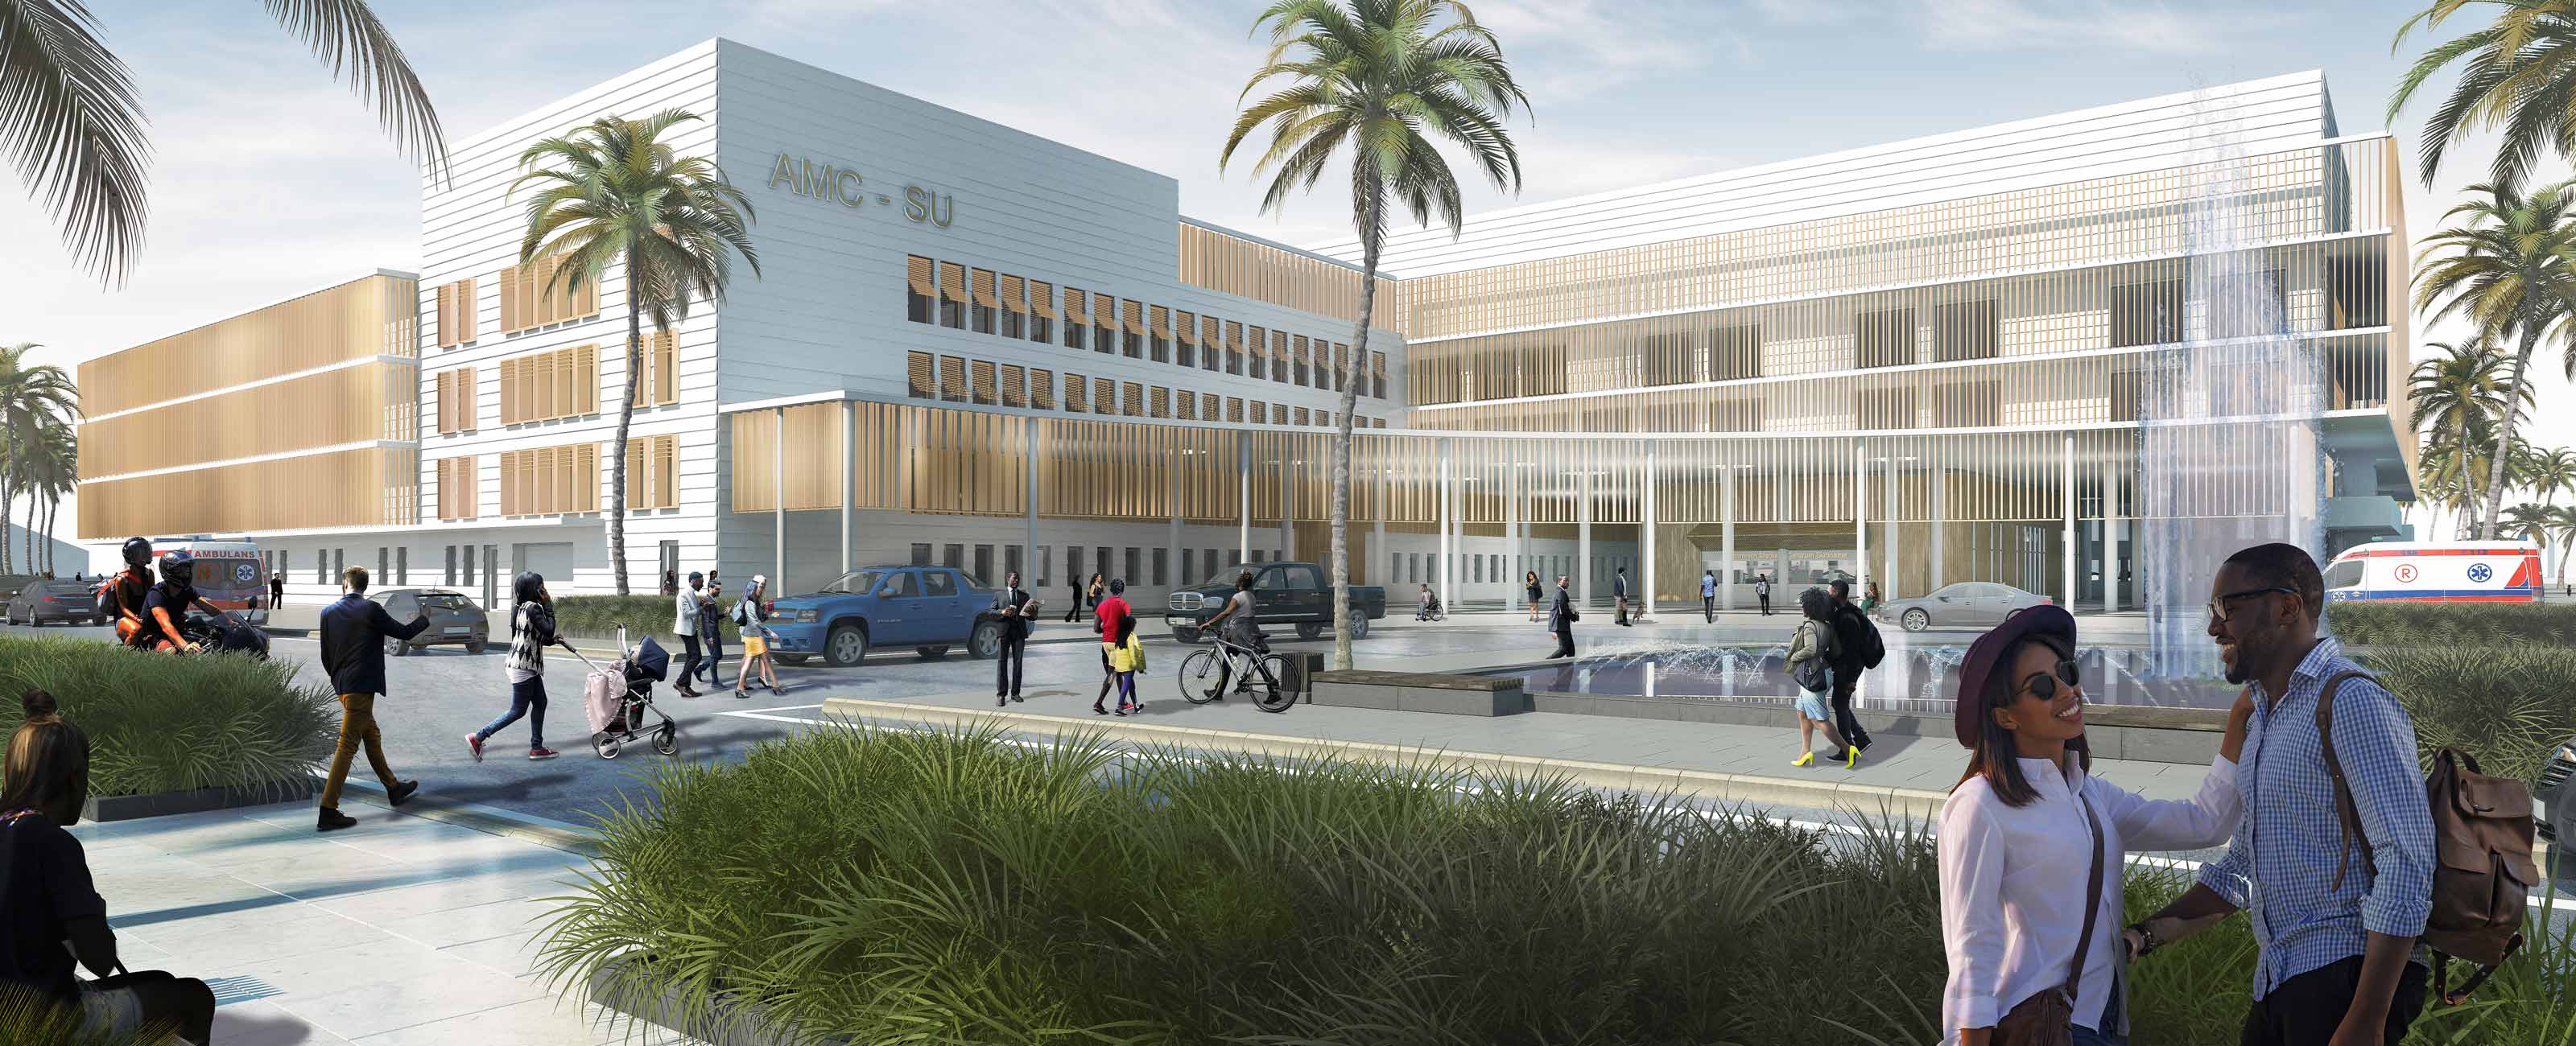 Academic Medical Centre Suriname | EGM architects